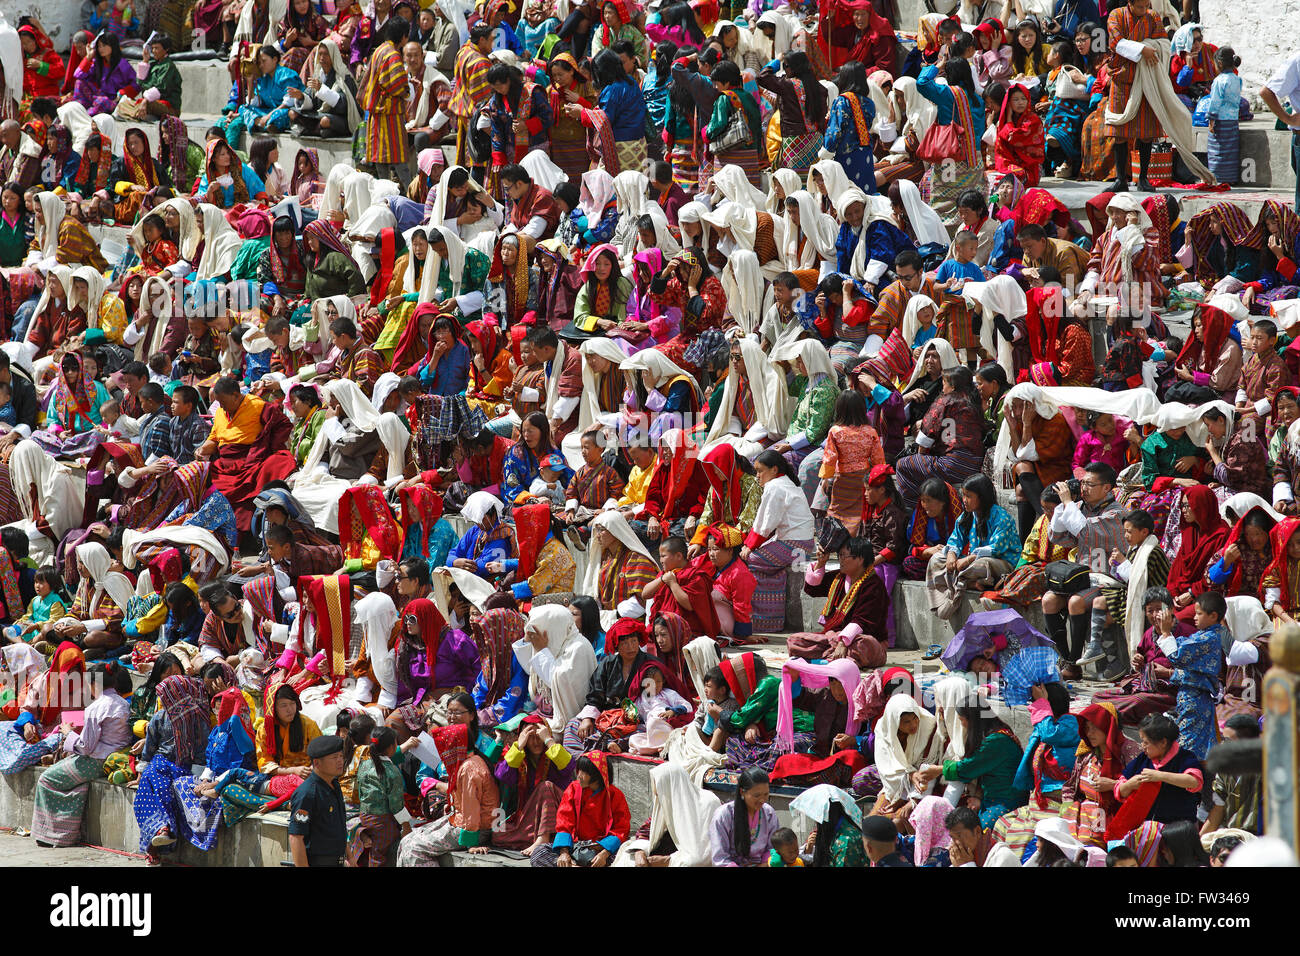 Audience at the Tashichho Dzong monastery festival, Thimphu, Bhutan Stock Photo